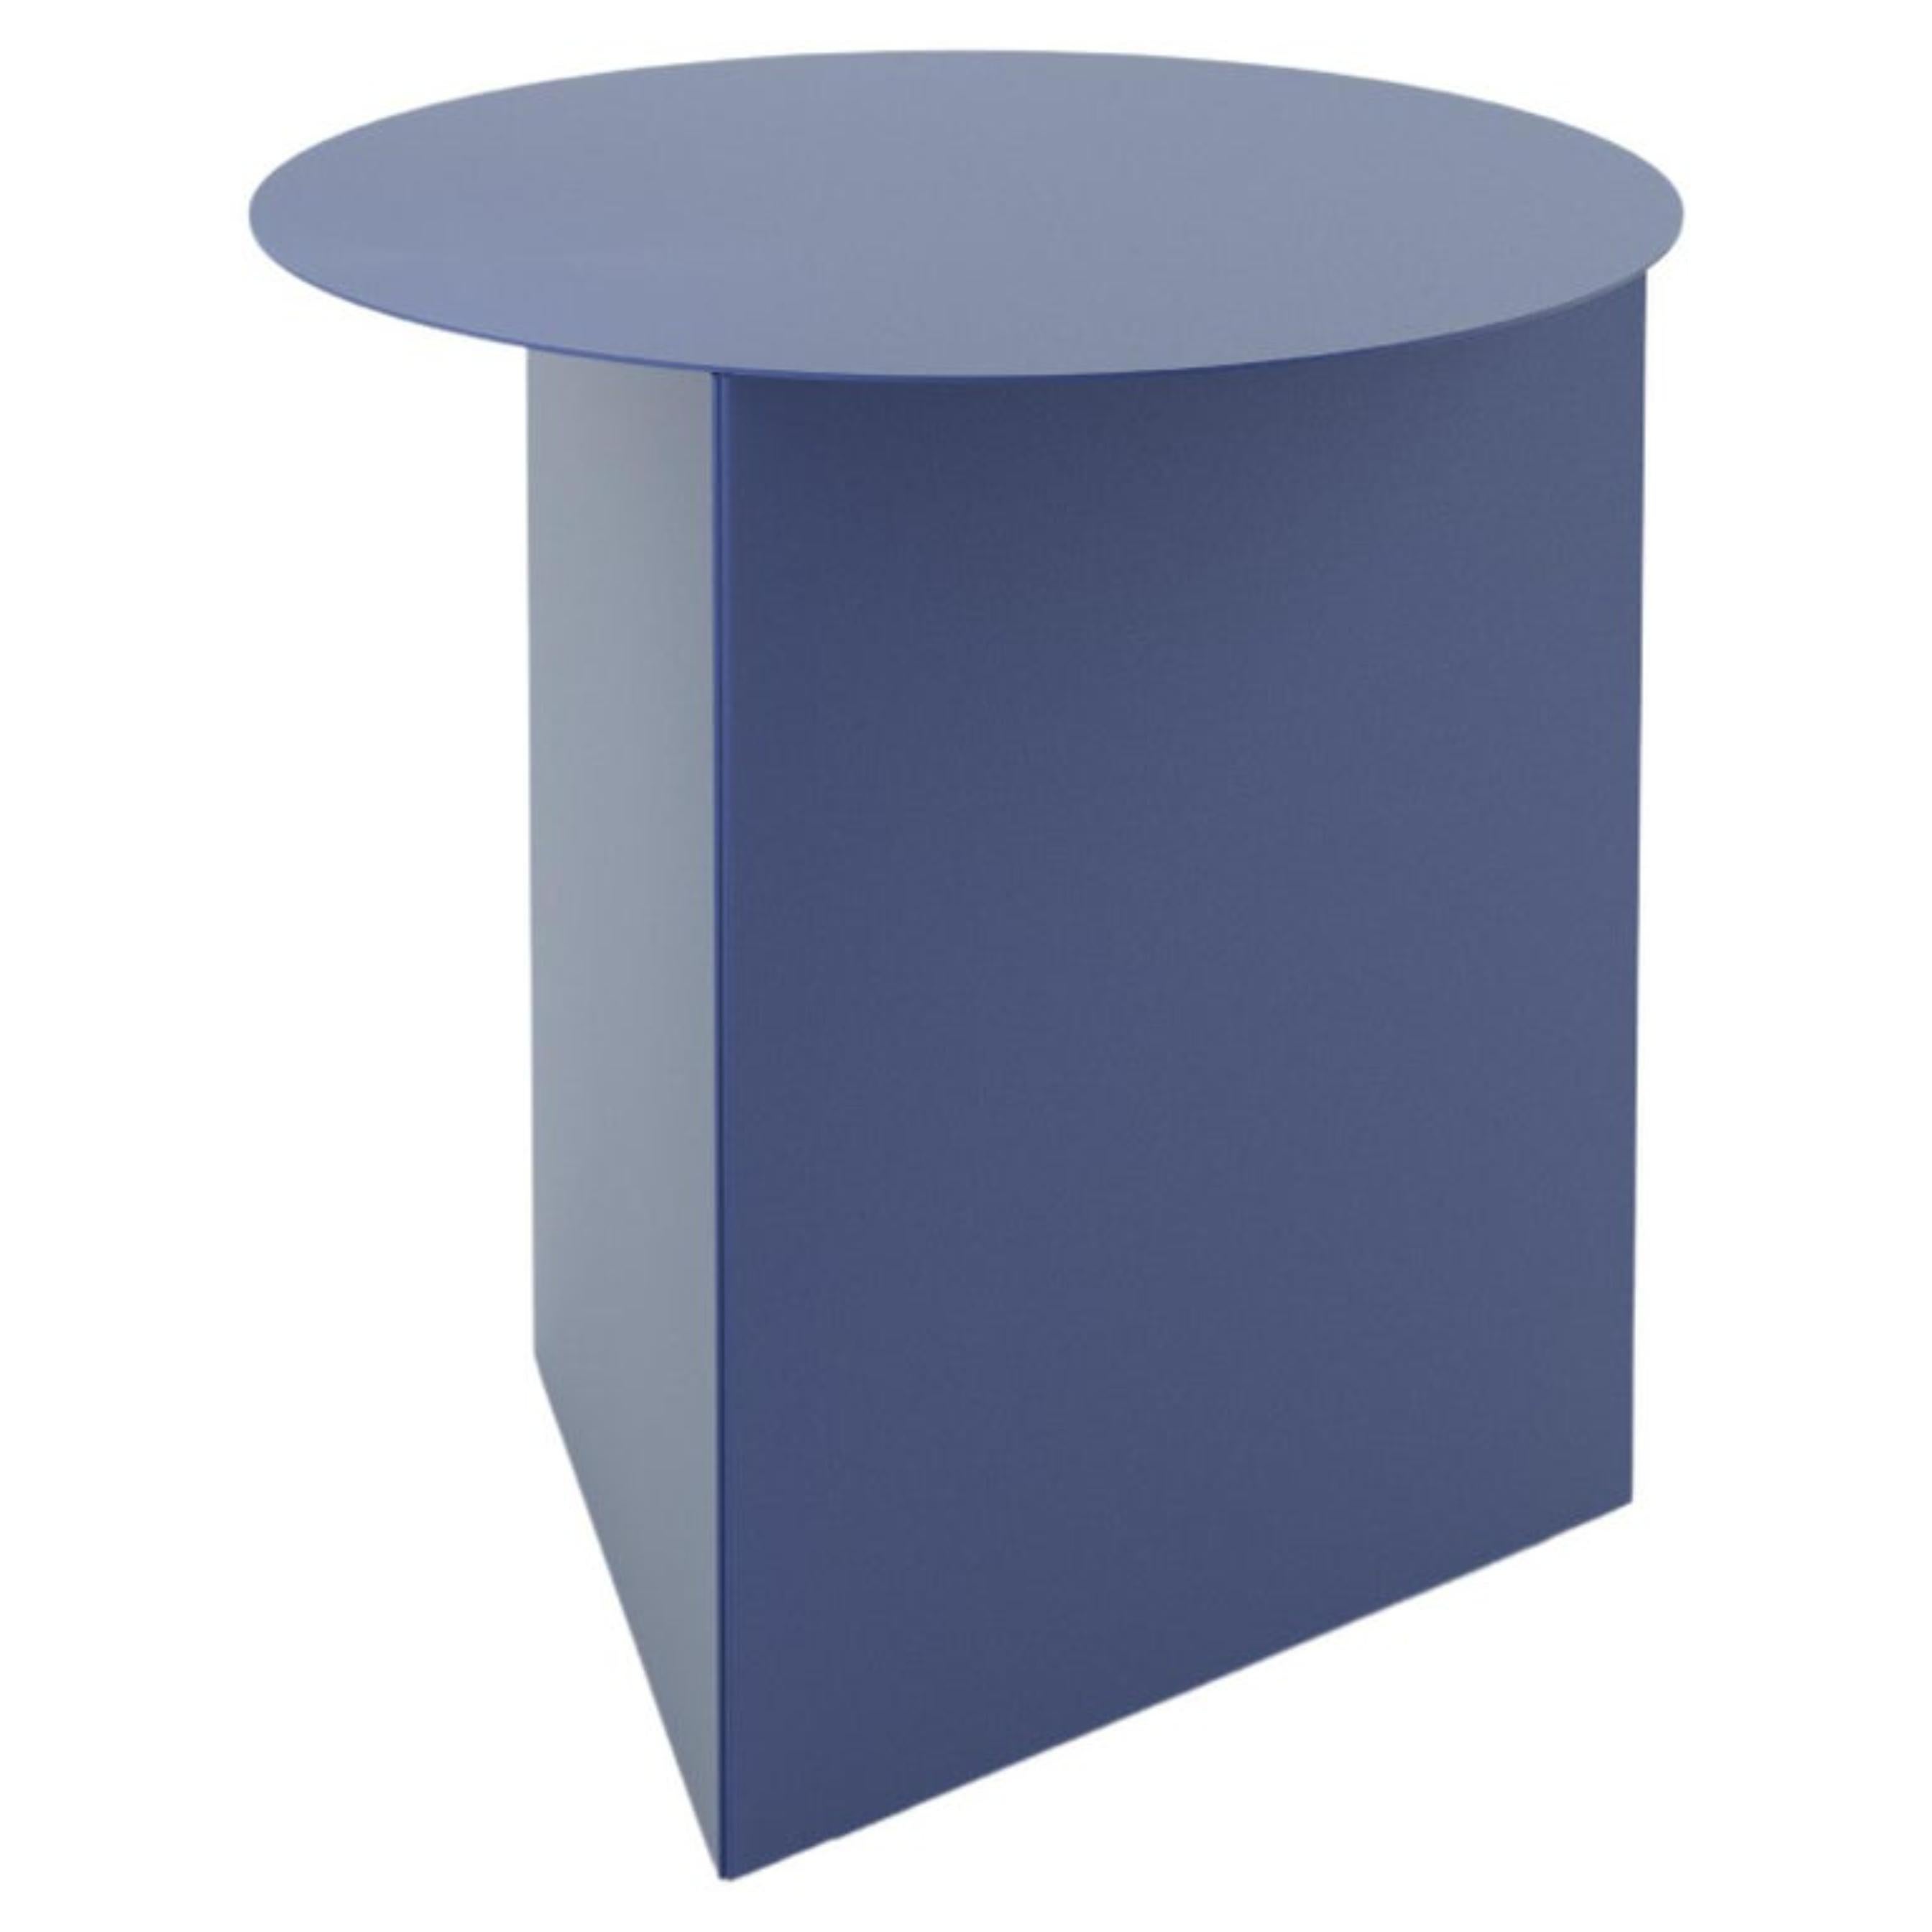 Steel Prisma tall 45 coffee table by Sebastian Scherer
Dimensions: D45x H45 cm
Materials: Steel.
Weight: 8 kg.
Also Available: Steel (matt): snow white / light sand / sun yellow / clay orange / rust red / navy blue / graphite grey / dark bronze